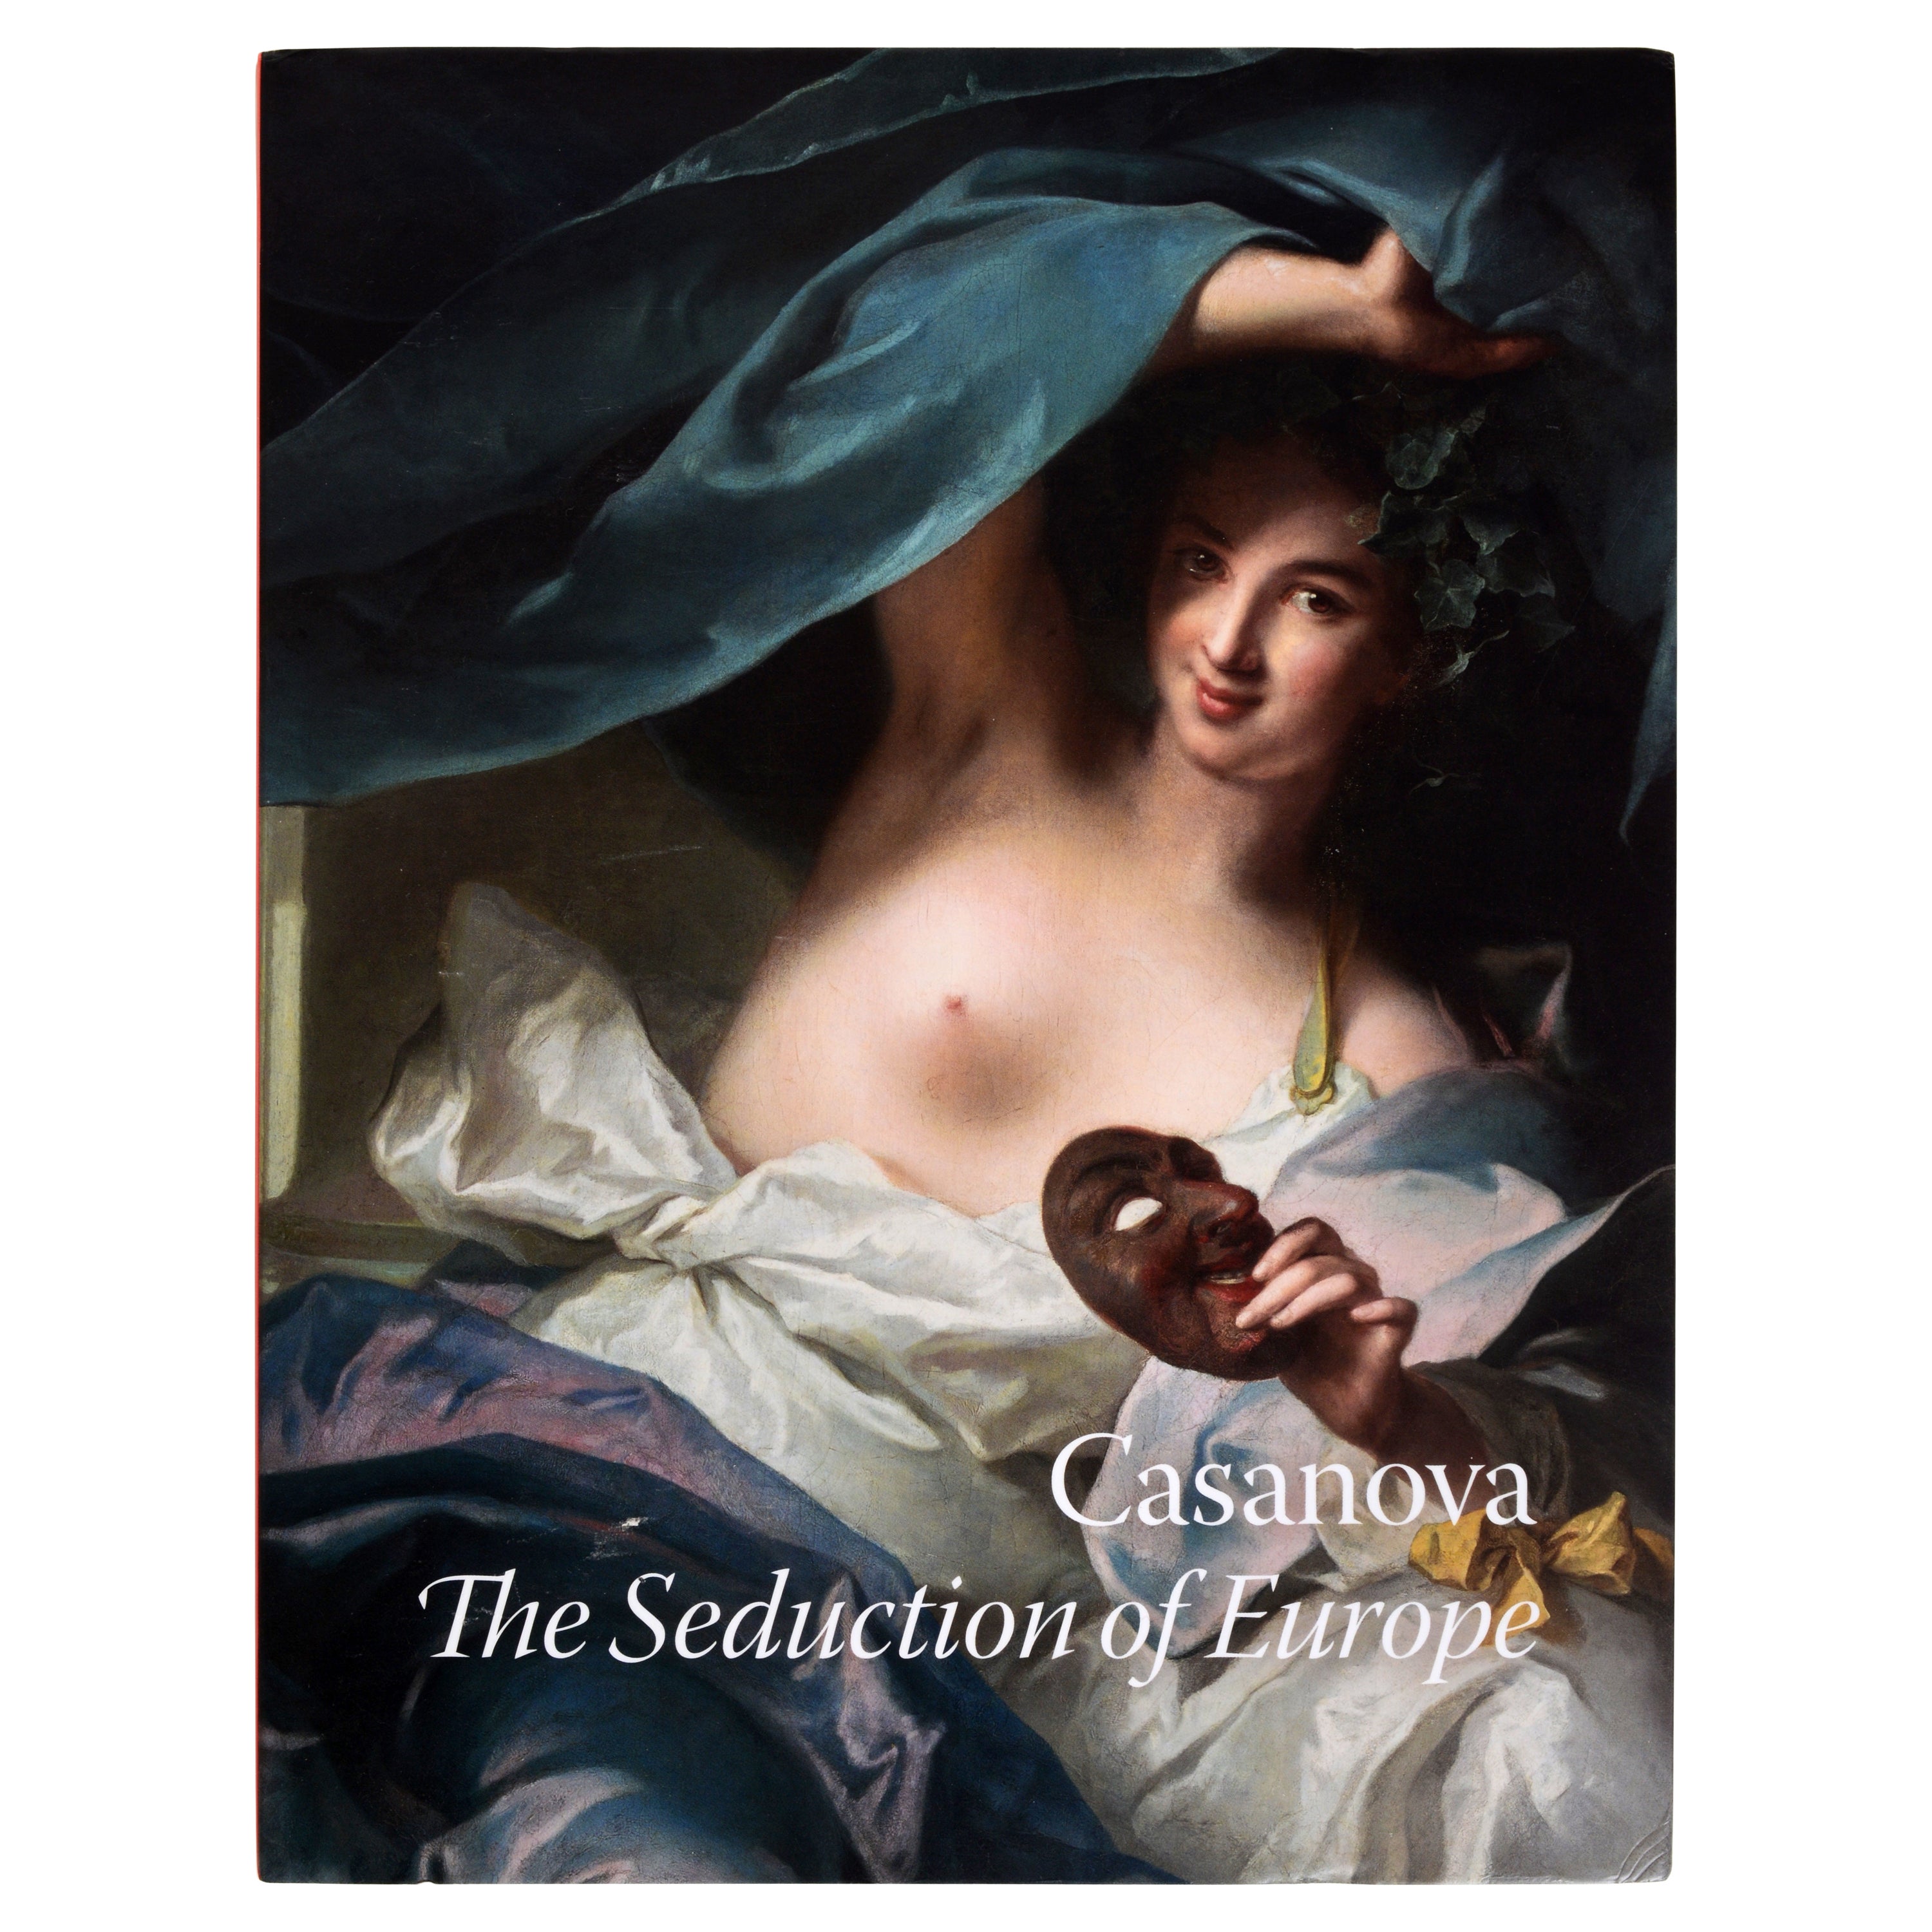 Exposition Casanovia ; Seduction of Europe, par Frederick Ilchman, Stated 1st Ed 